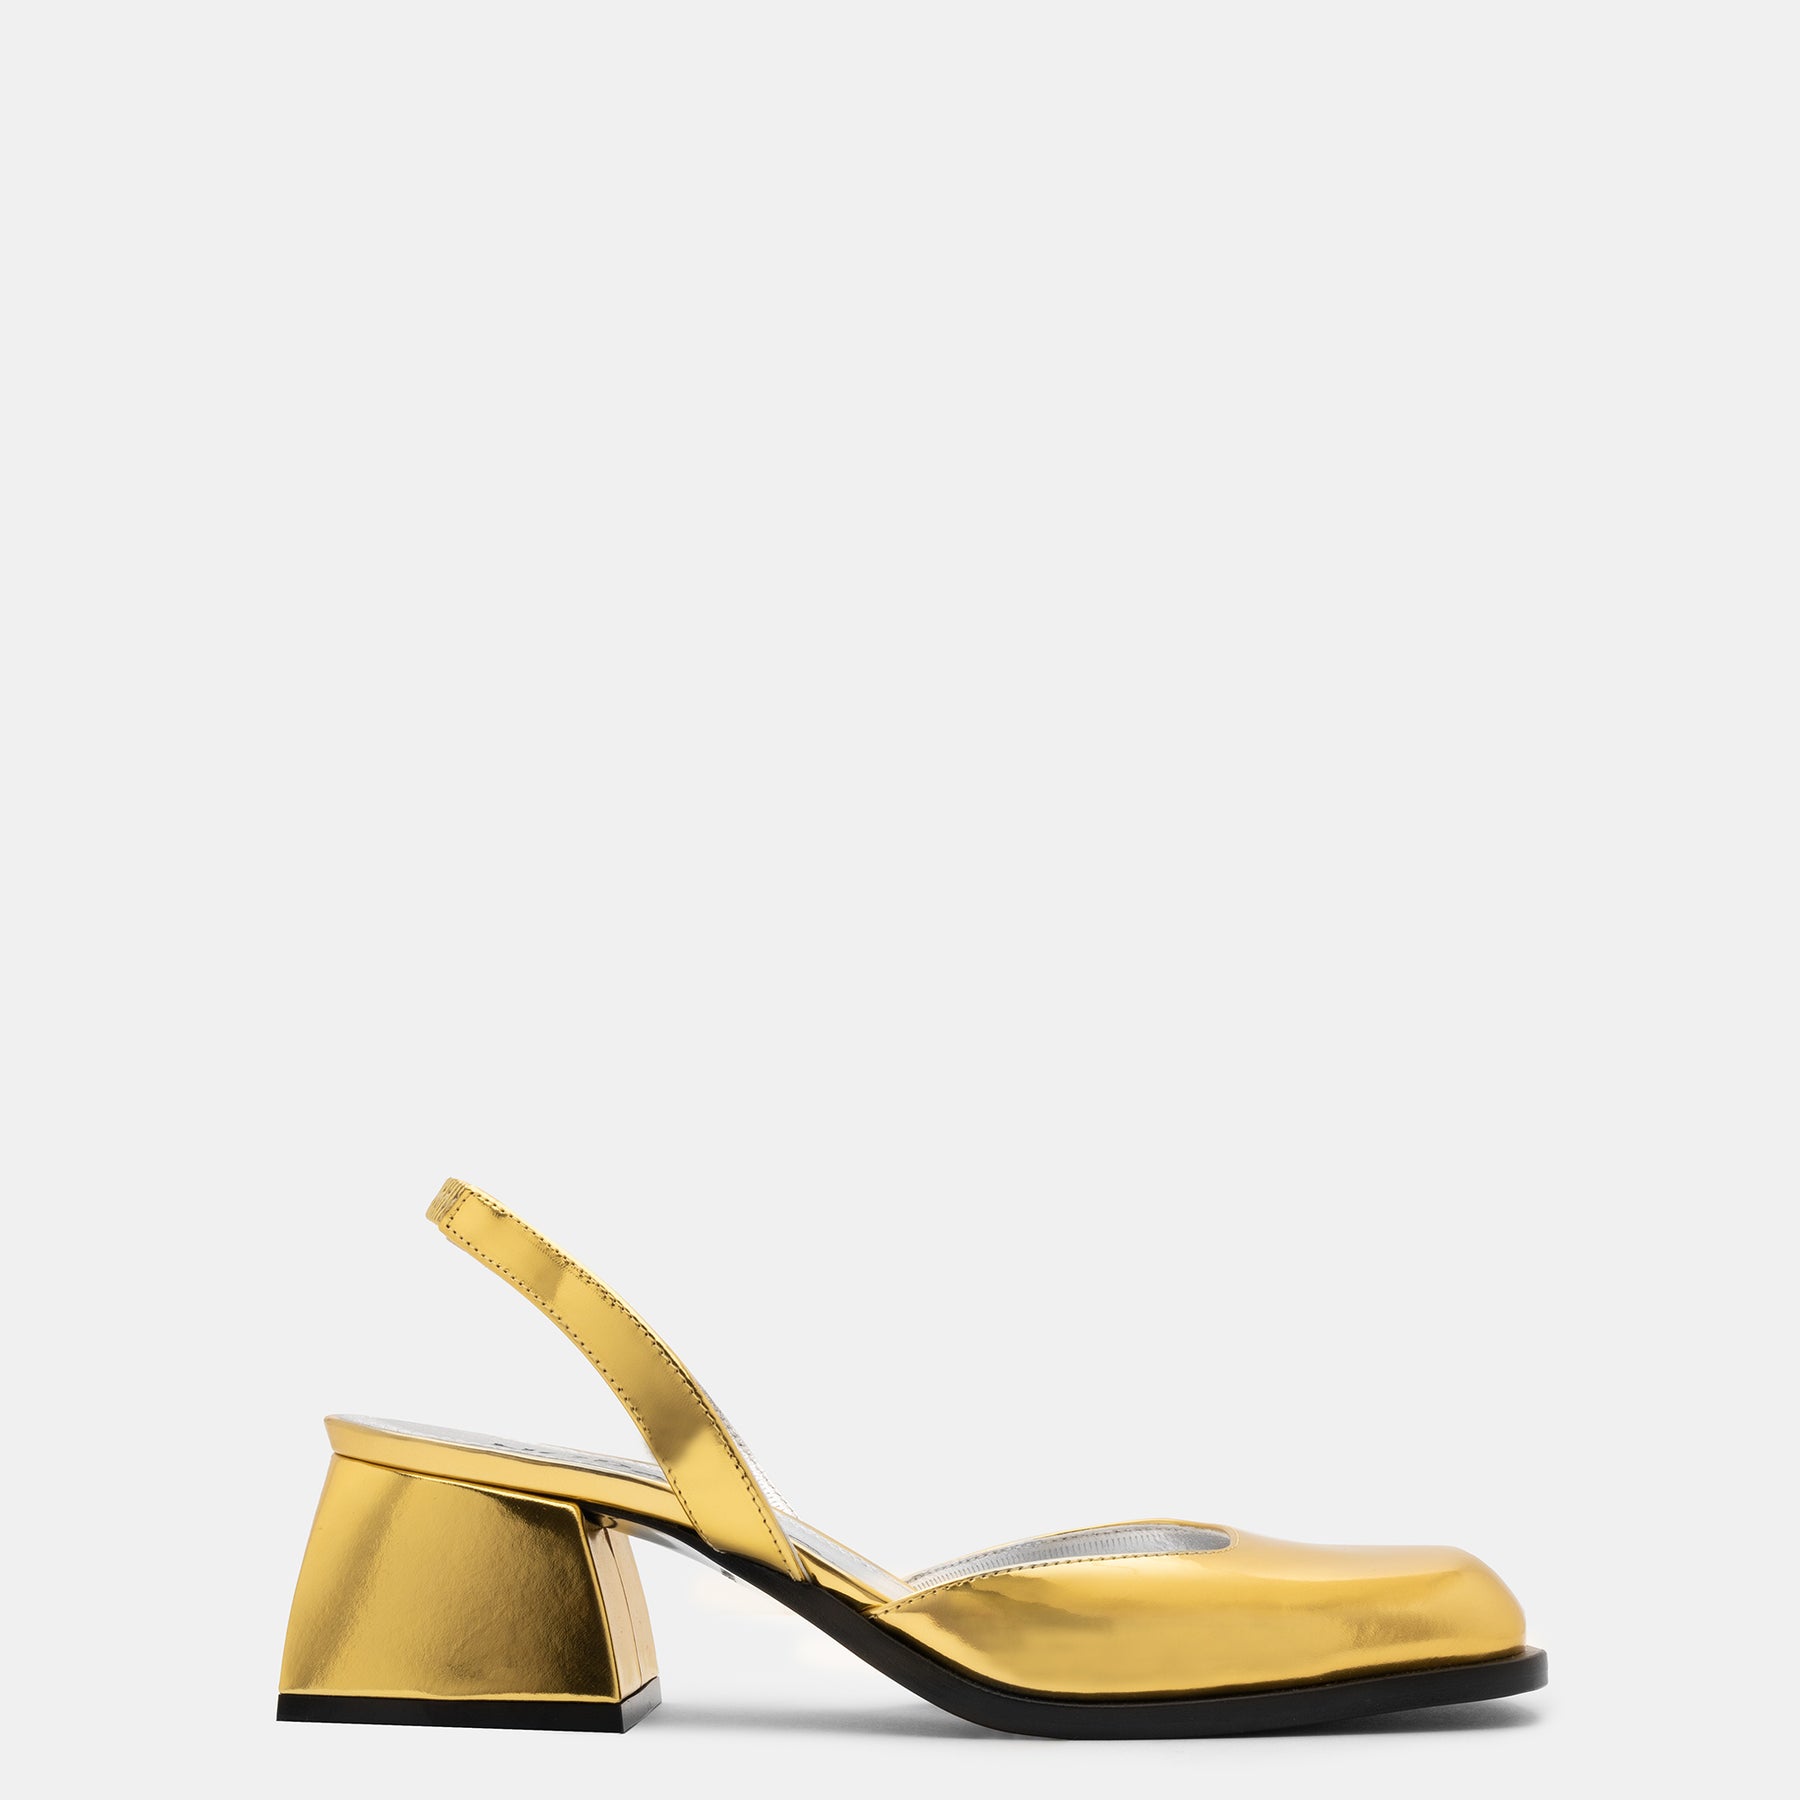 Nodaleto slingback shoe in gold